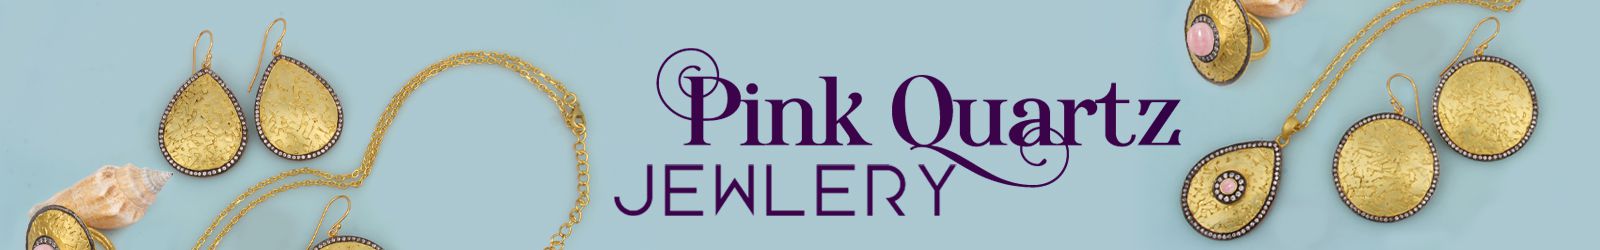 Silver Pink Quartz Jewelry Wholesale Supplier